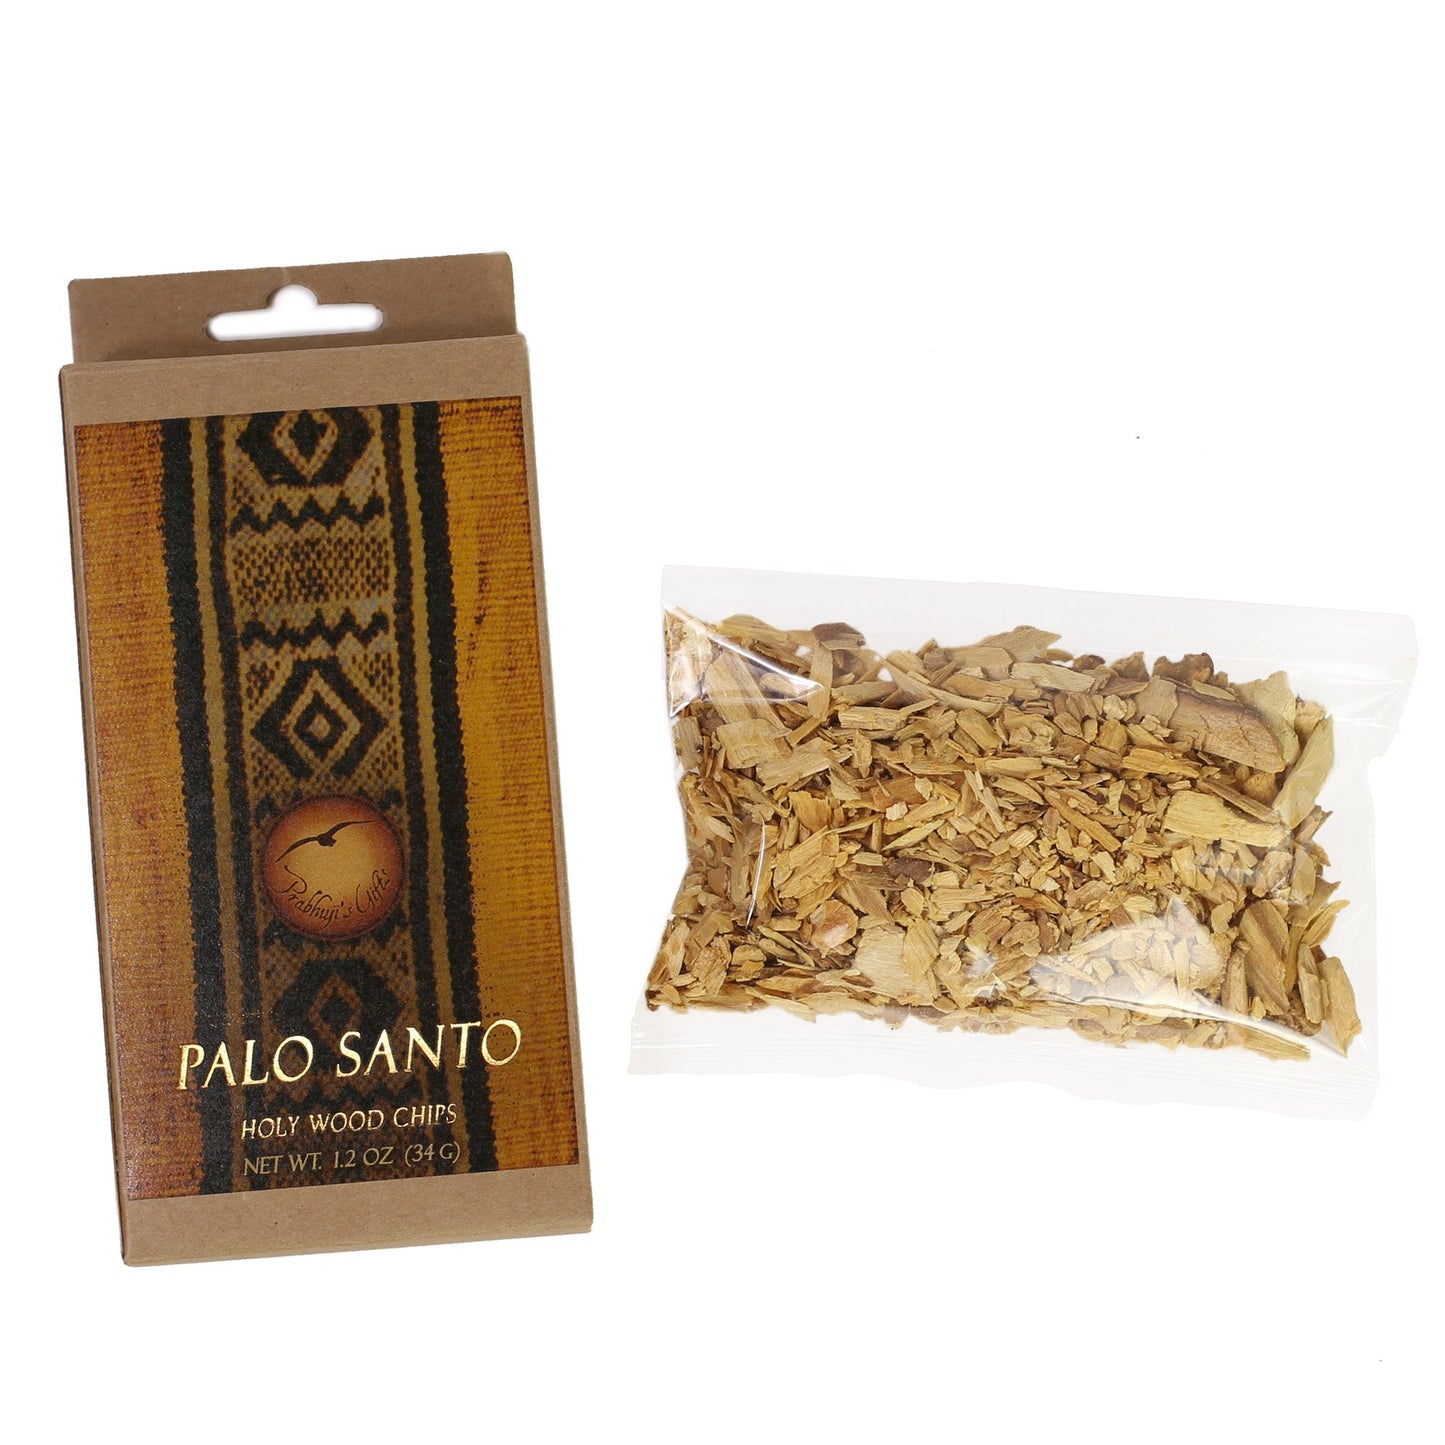 Palo Santo Raw Incense Wood - Chips - 1.2 oz (34 g) - Tree Spirit Wellness